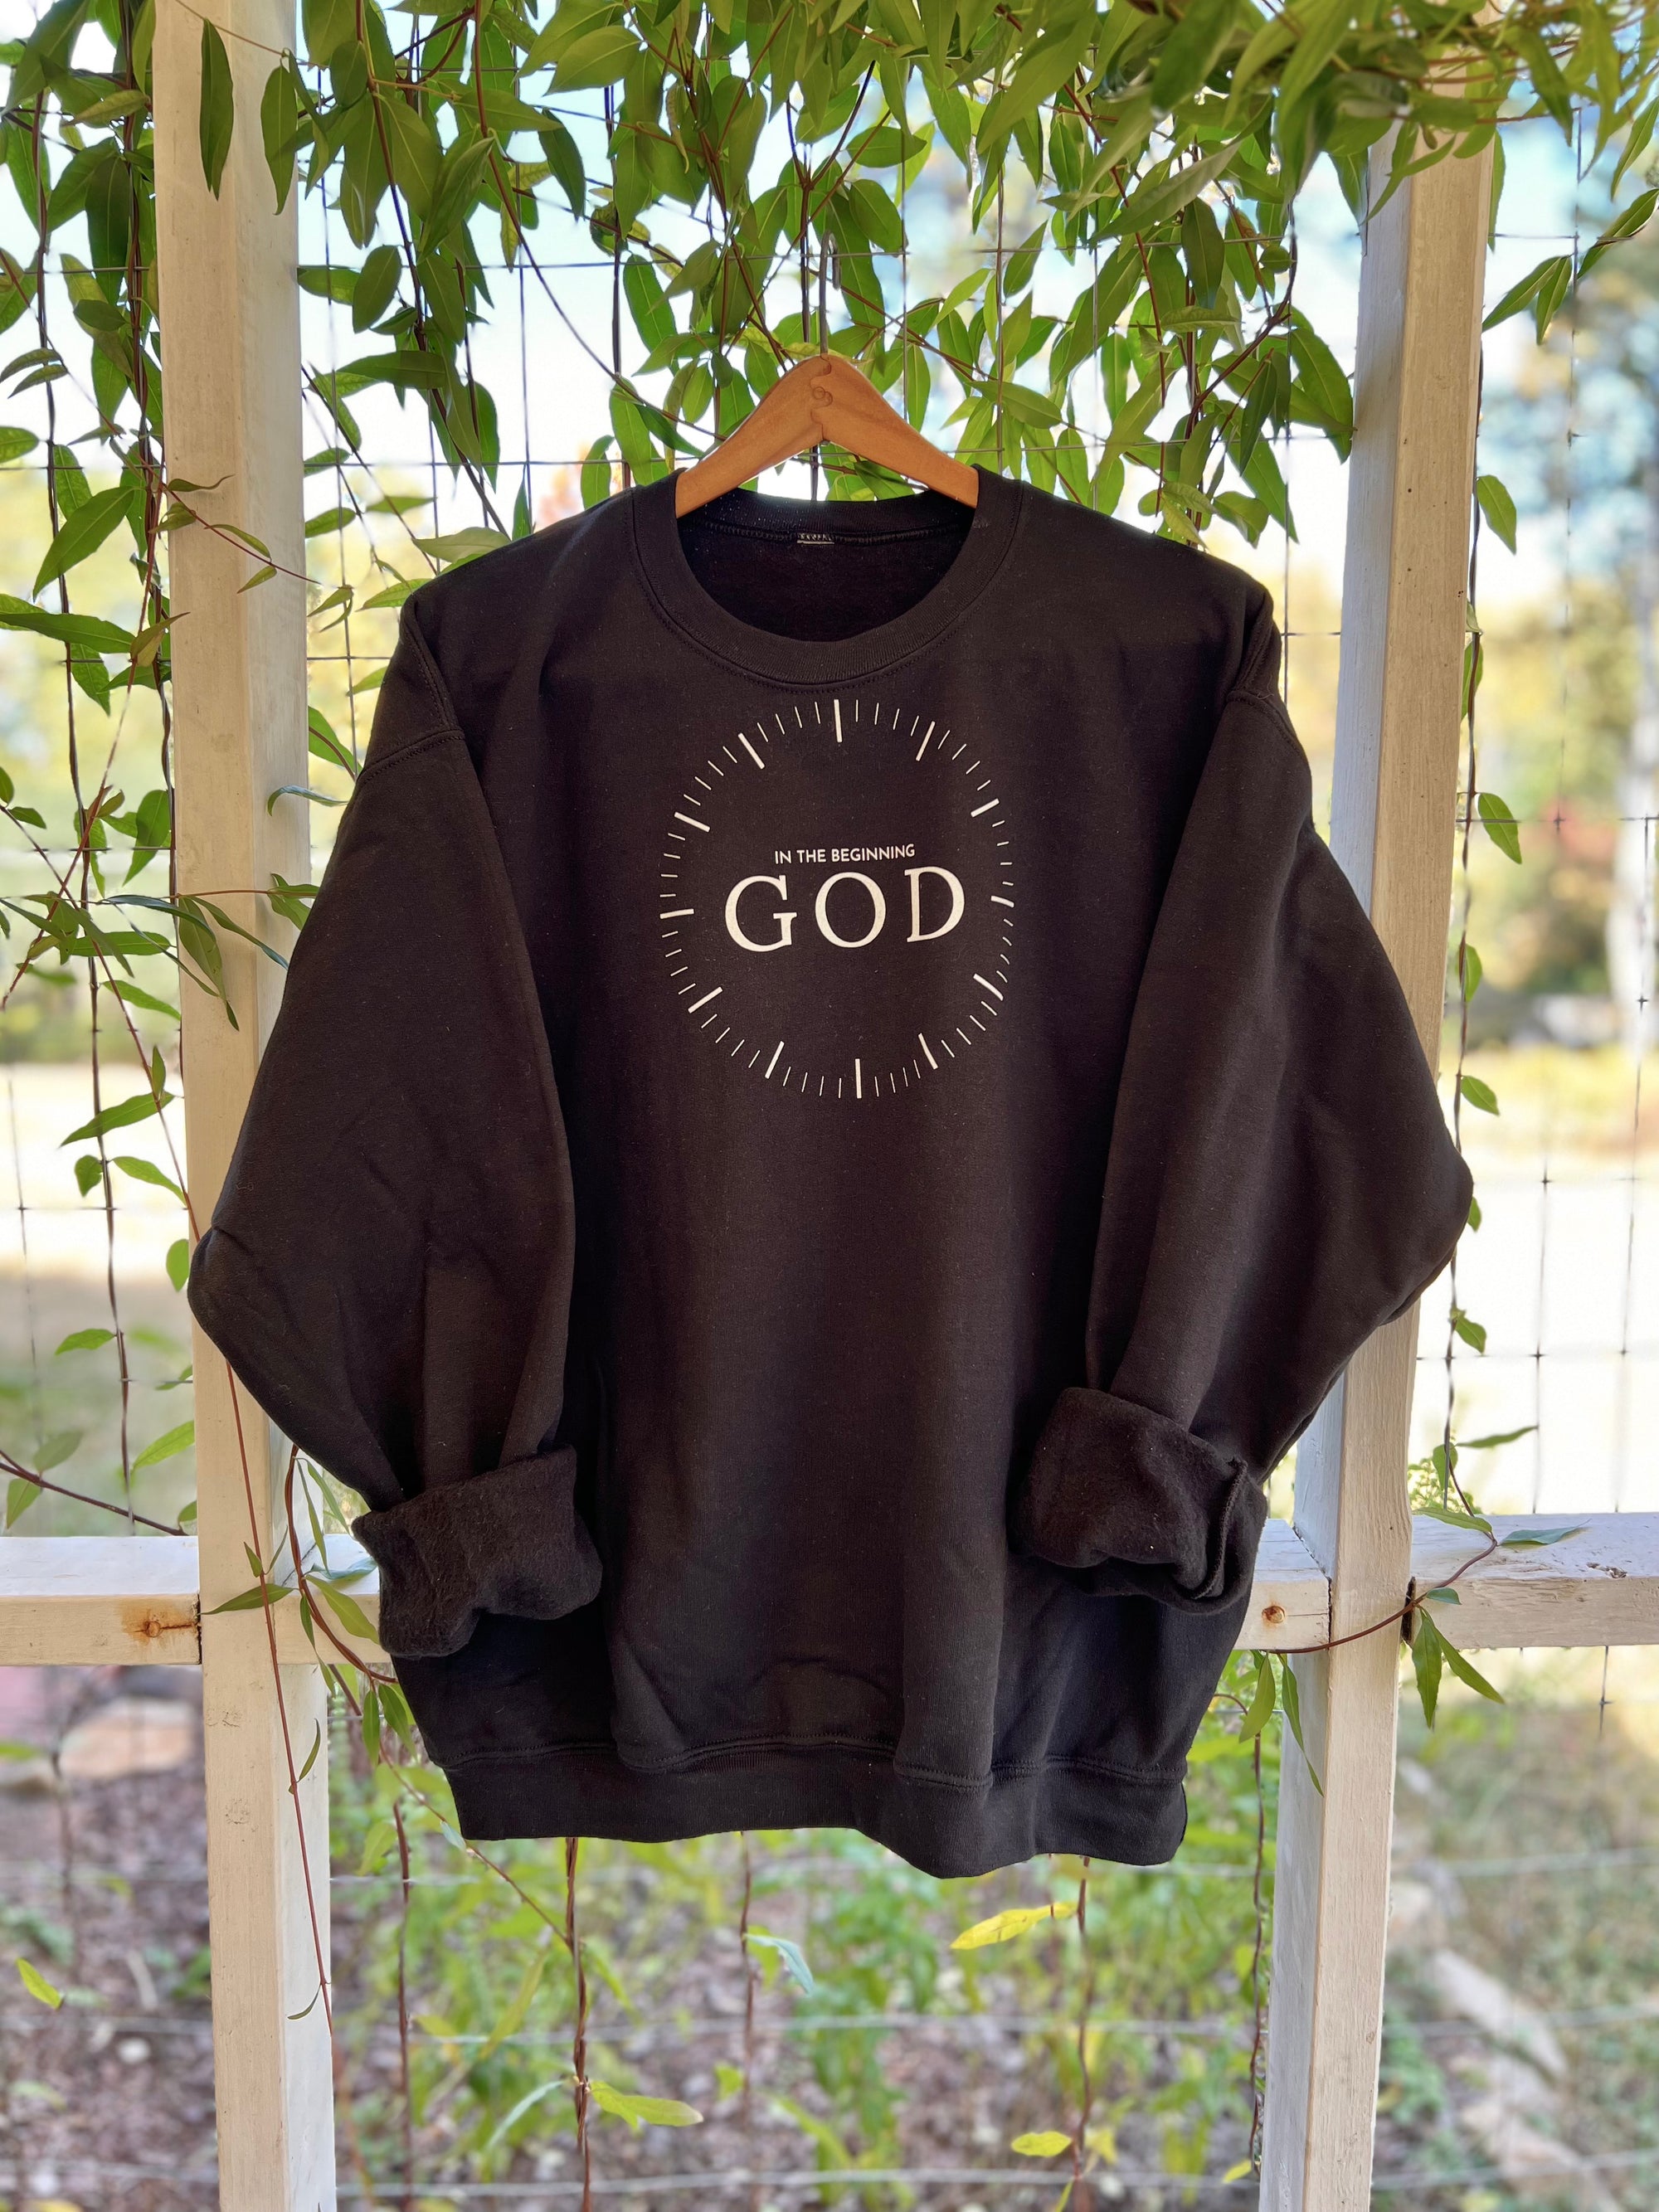 "In the Beginning God" Sweatshirt